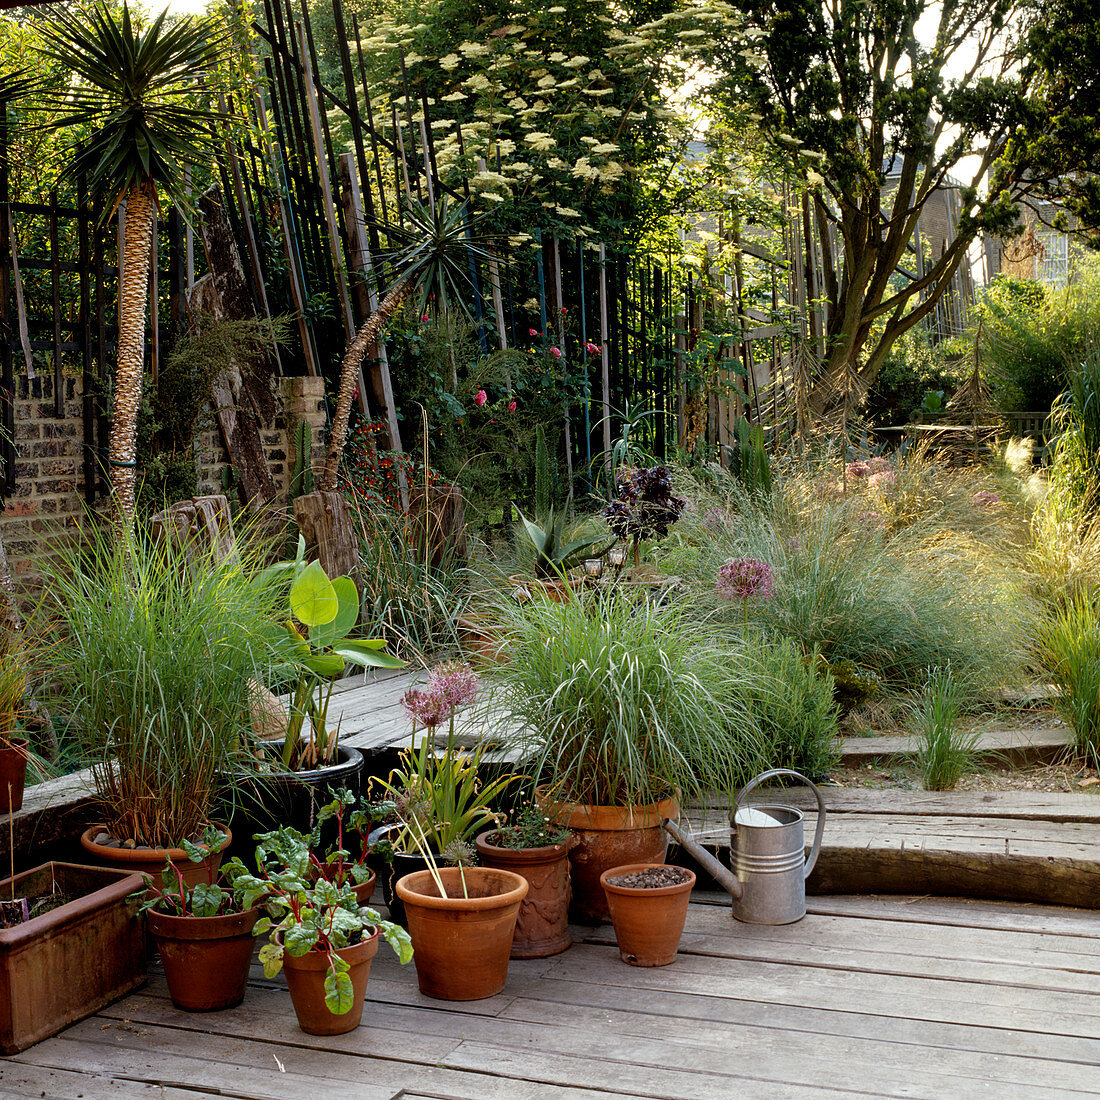 Ornamental grasses in terracotta pots on wooden deck of Mediterranean garden